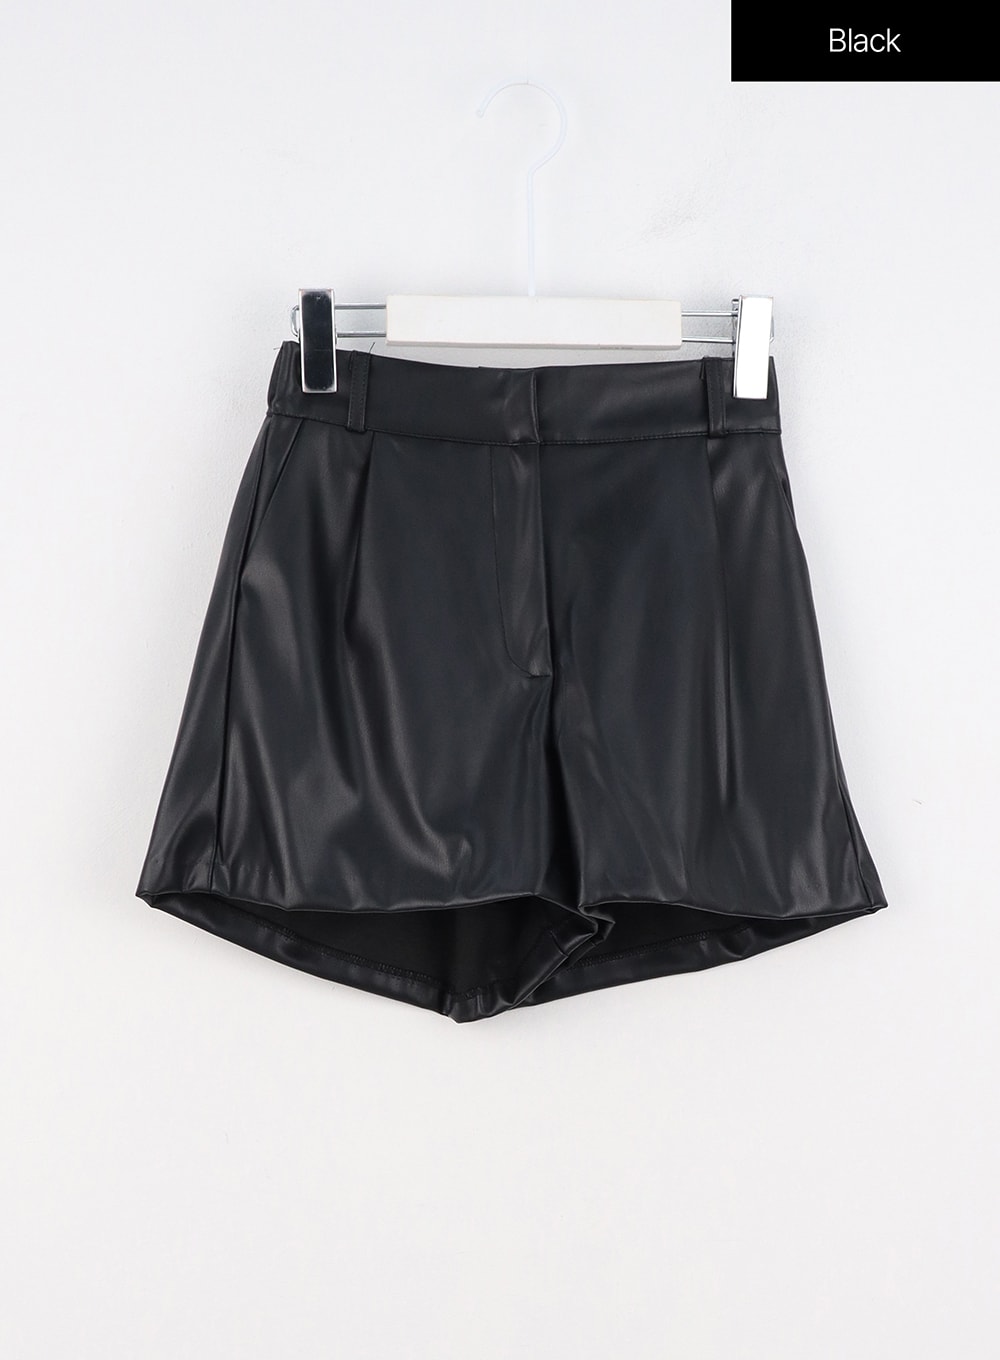 modern-minimalist-faux-leather-shorts-oo319 / Black